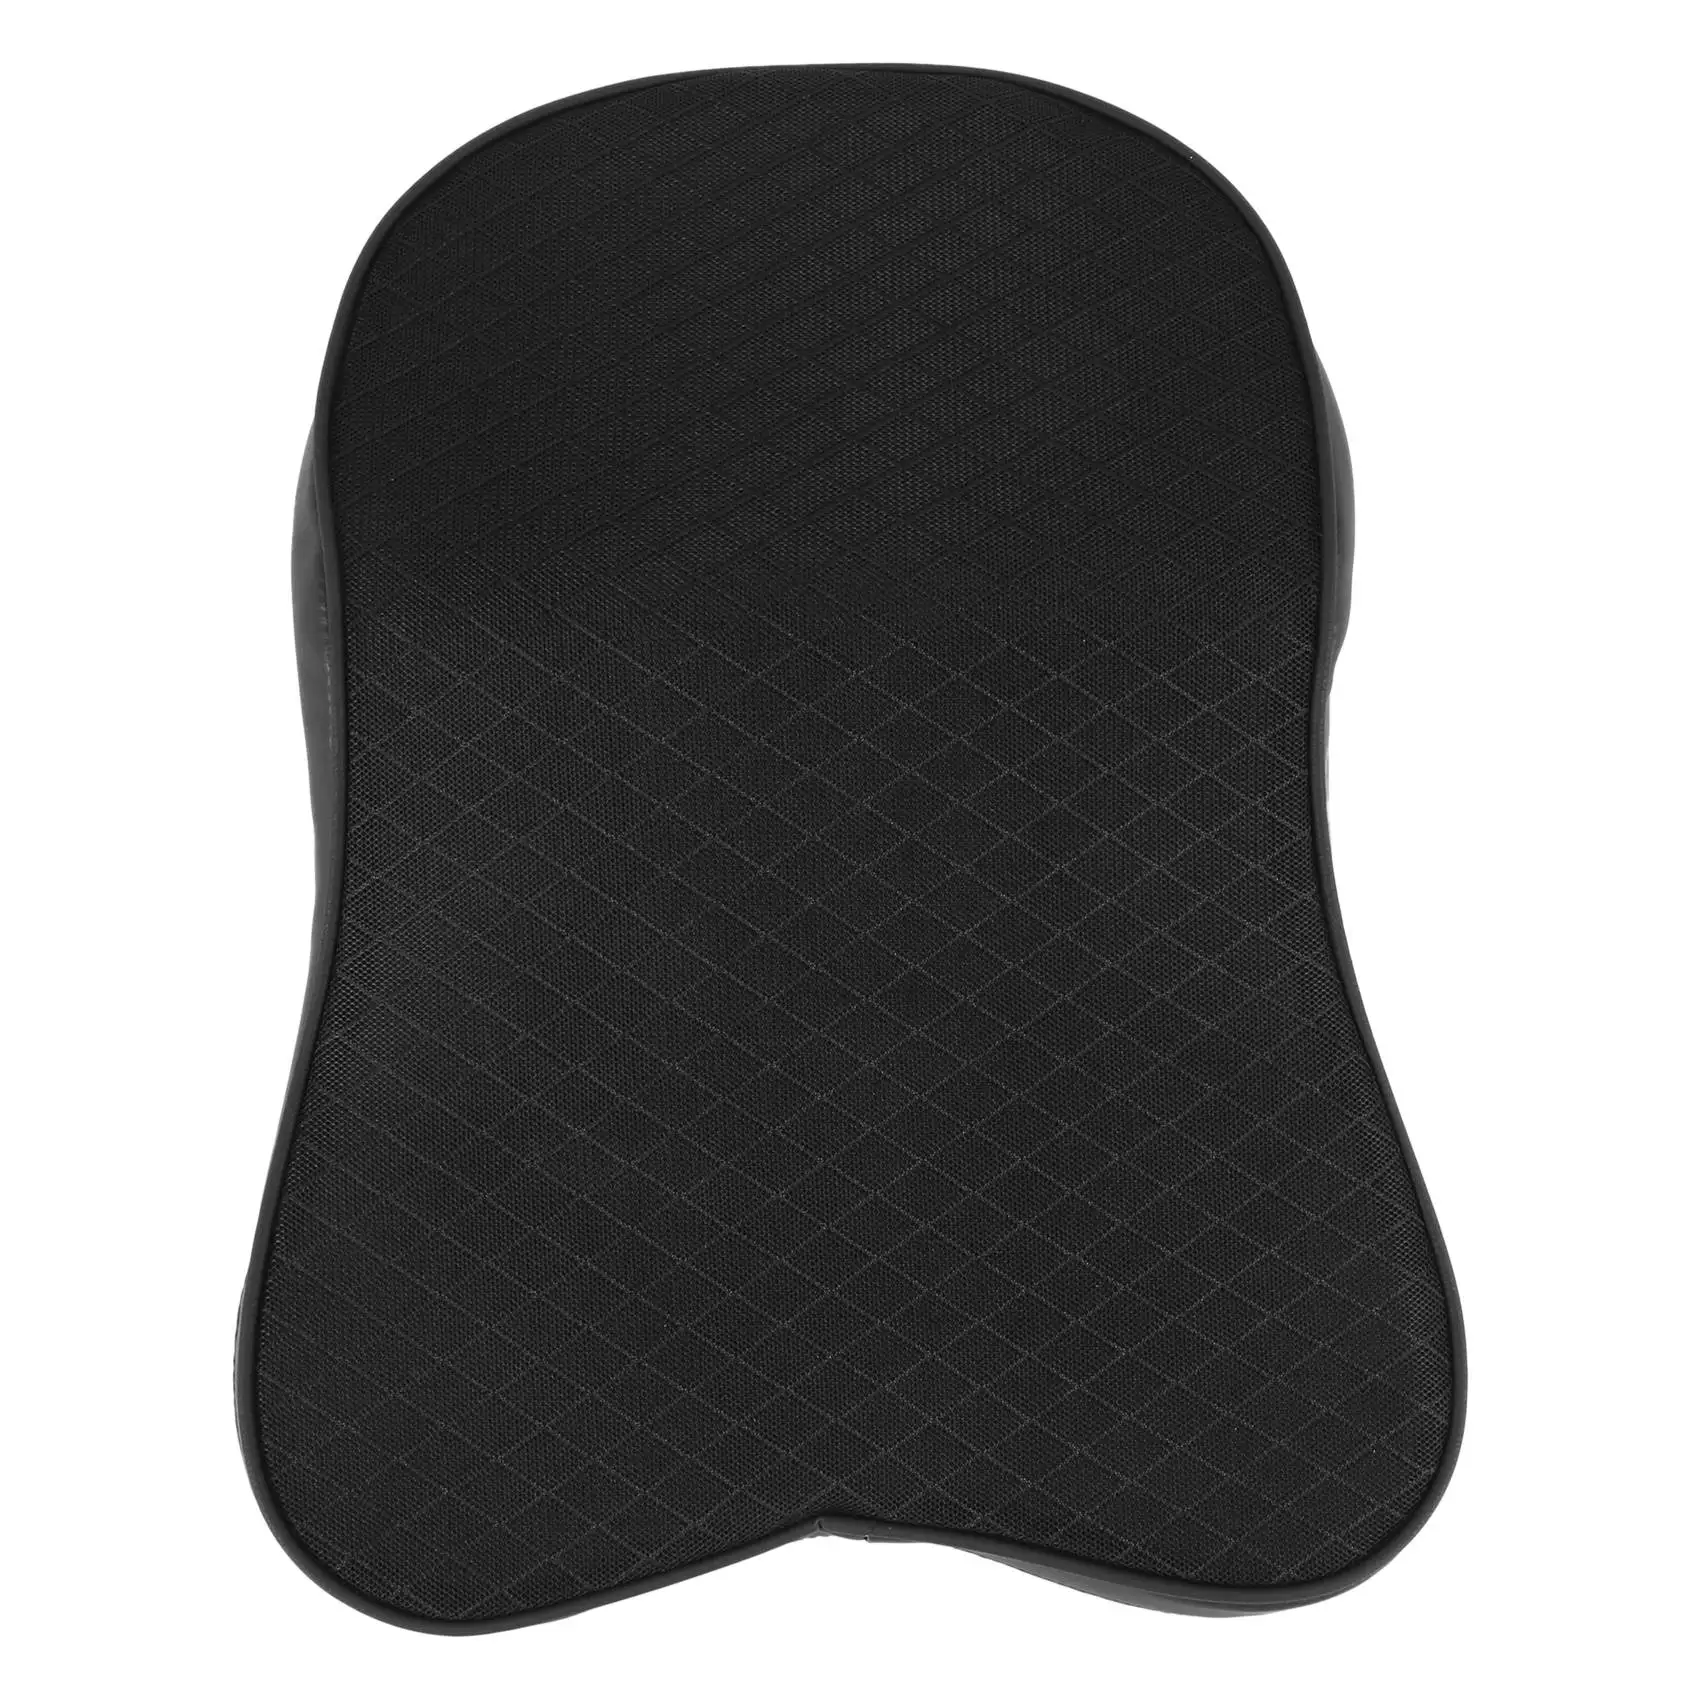 

Car Neck Pillow 3D Memory Foam Head Rest Adjustable Auto Headrest Pillow Black Travel Neck Cushion Seat